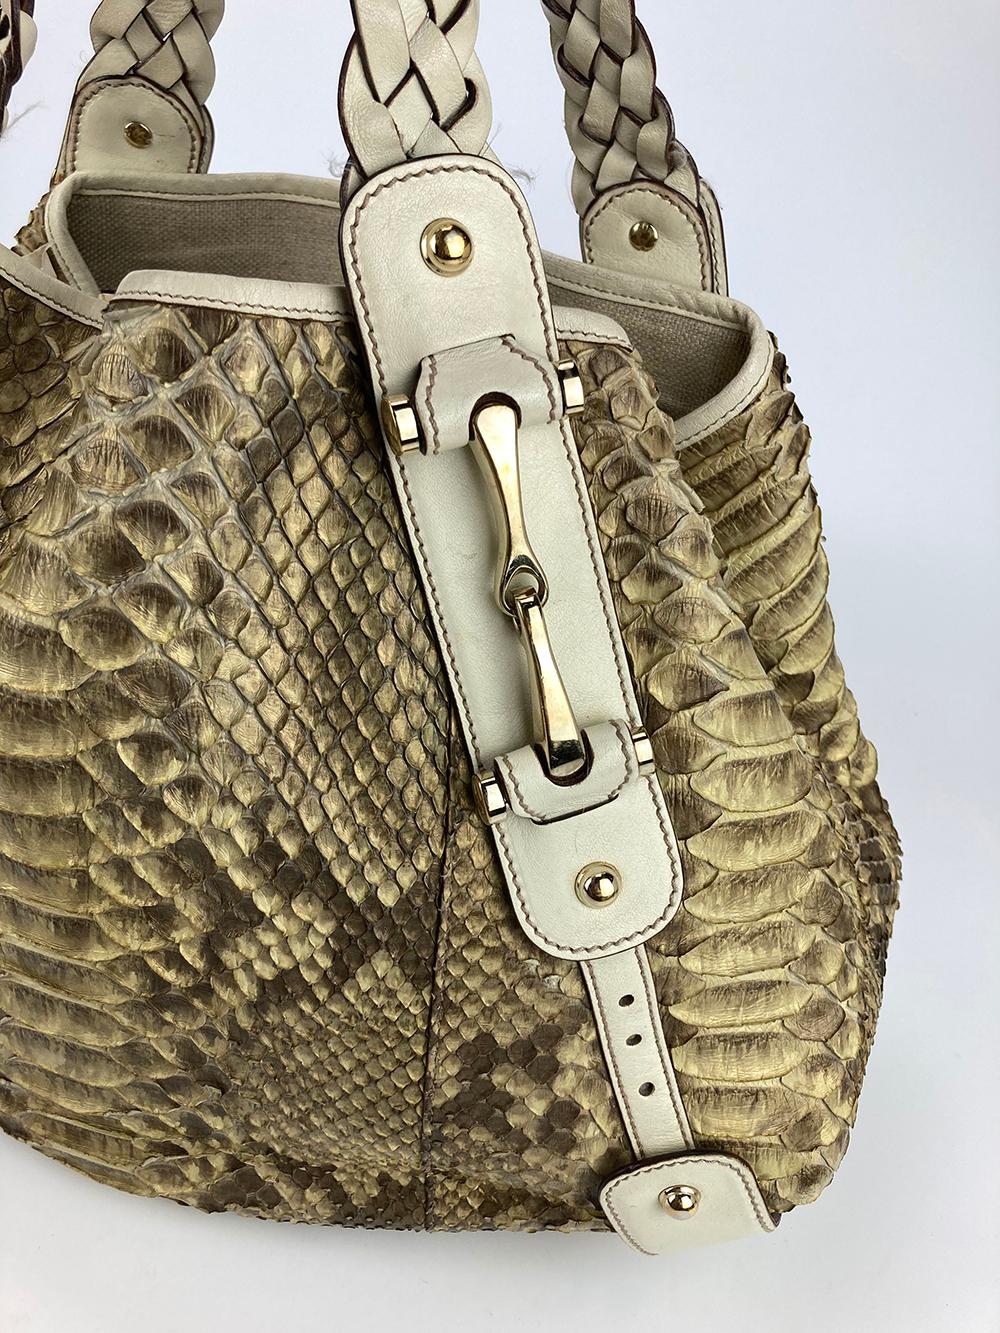 Gucci Python Pelham Shoulder Bag In Good Condition For Sale In Philadelphia, PA